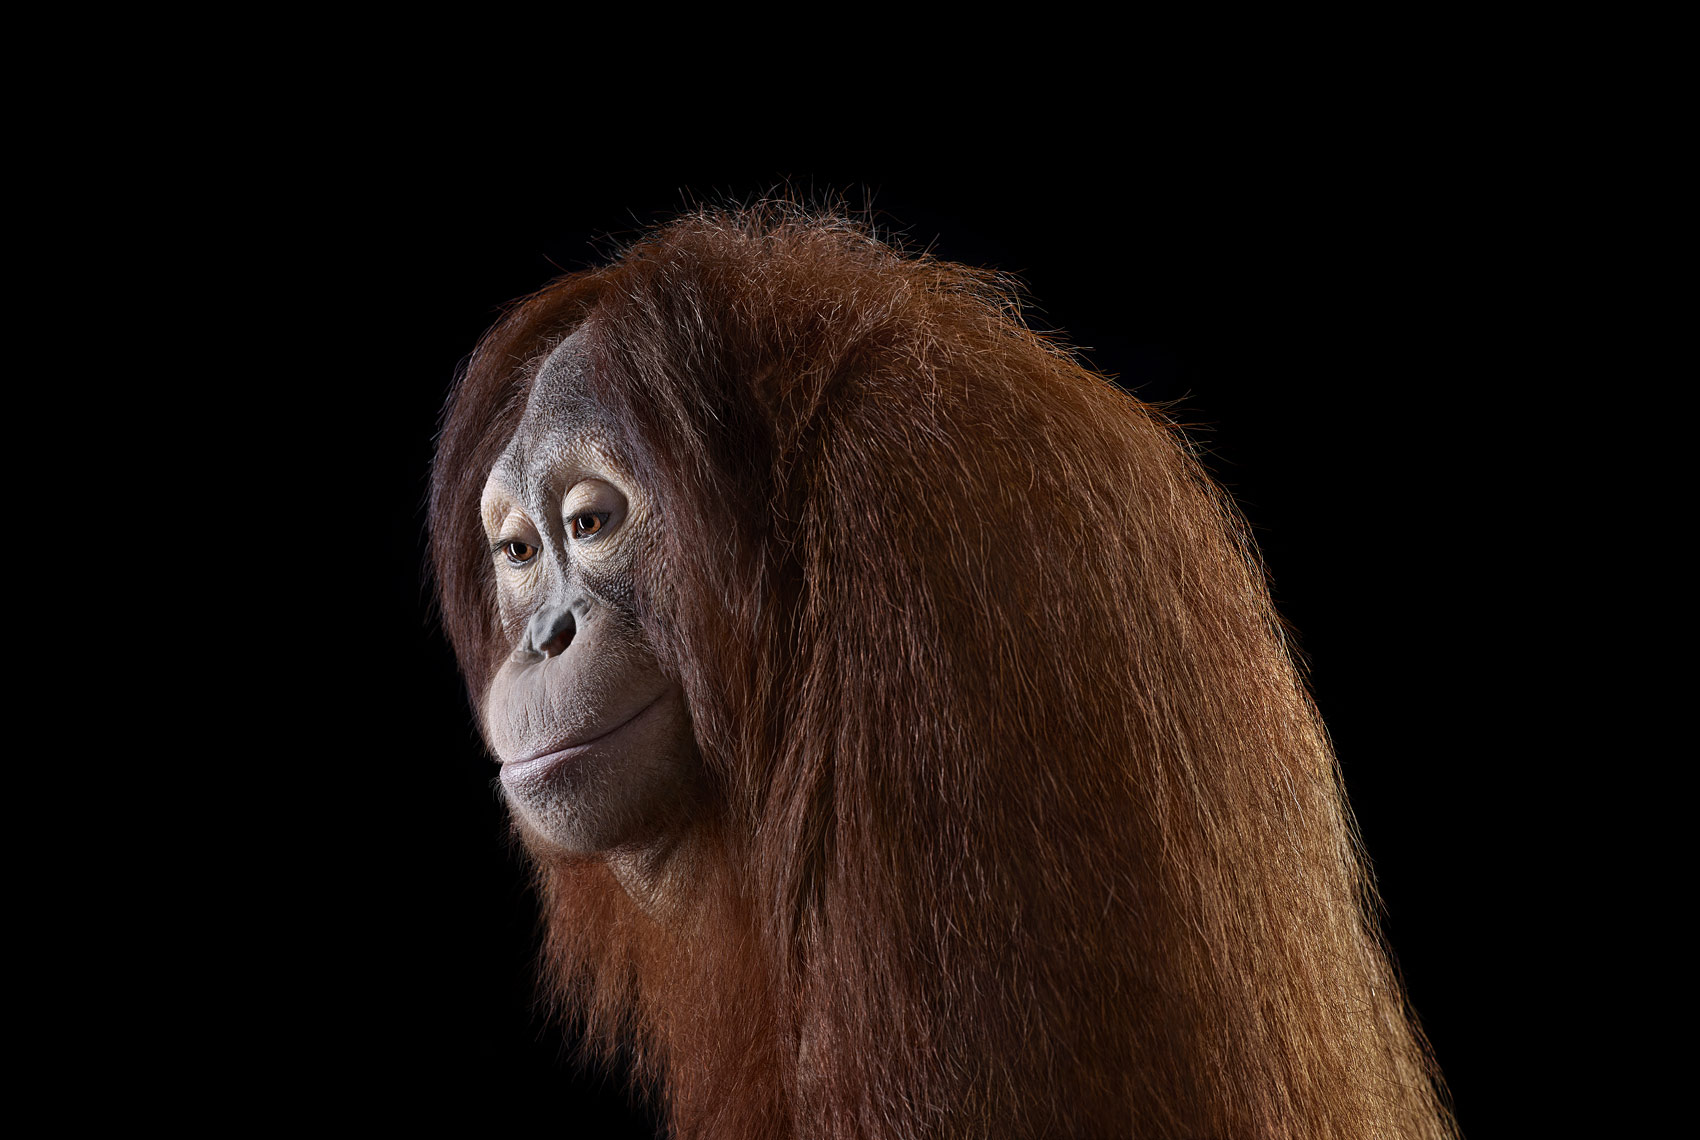 Orangutan pensive studio portrait by wildlife photographer Brad Wilson